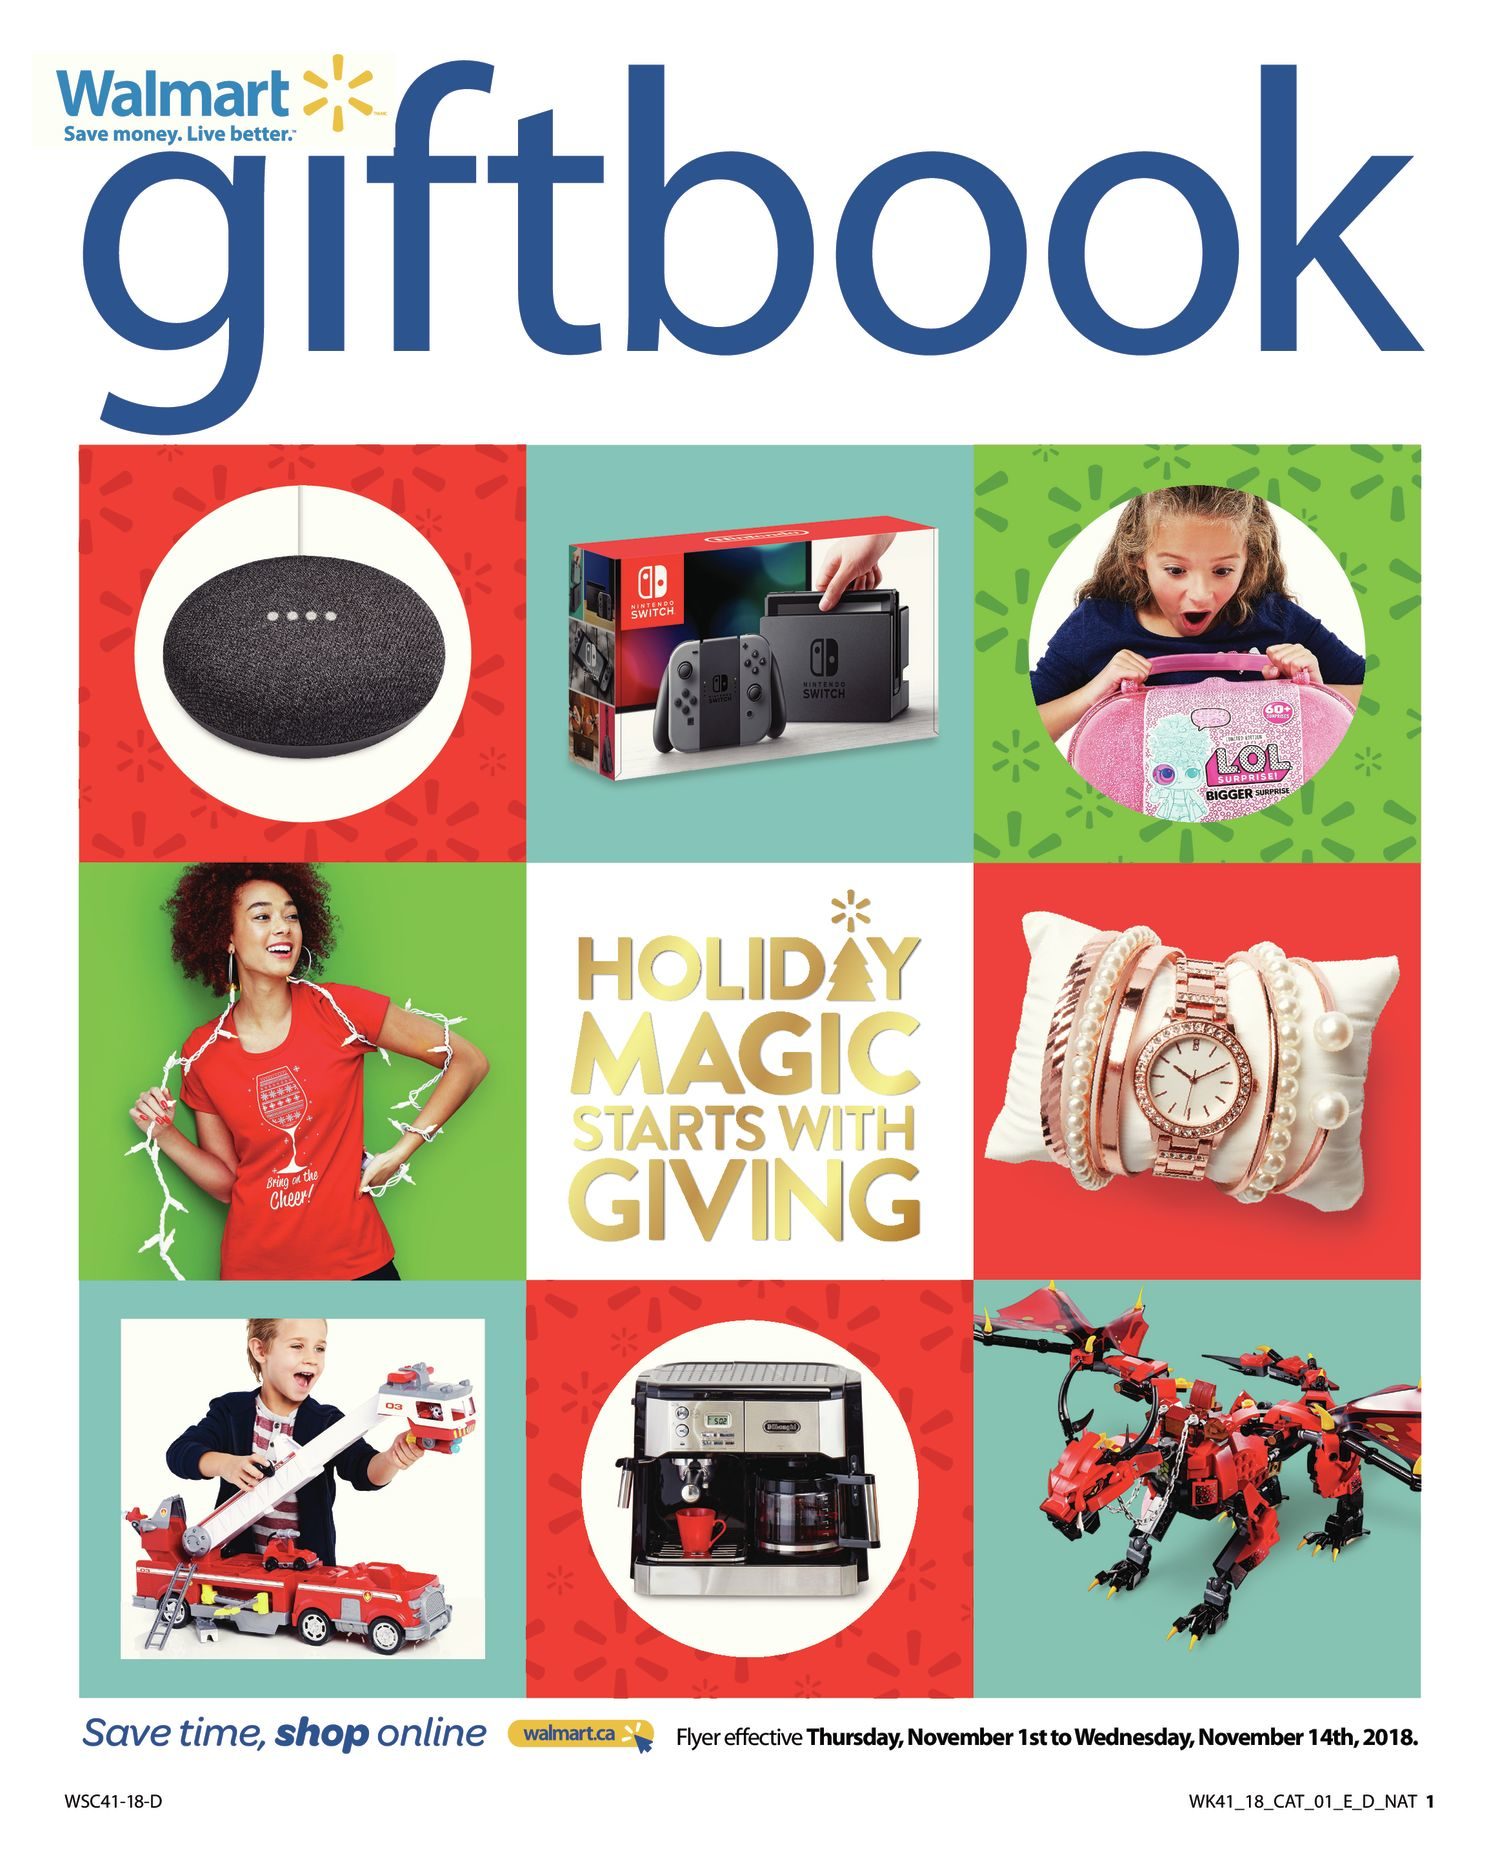 Walmart Weekly Flyer Giftbook Holiday Magic Starts With Giving Nov 1 14 Redflagdeals Com - roblox holiday magic 2018